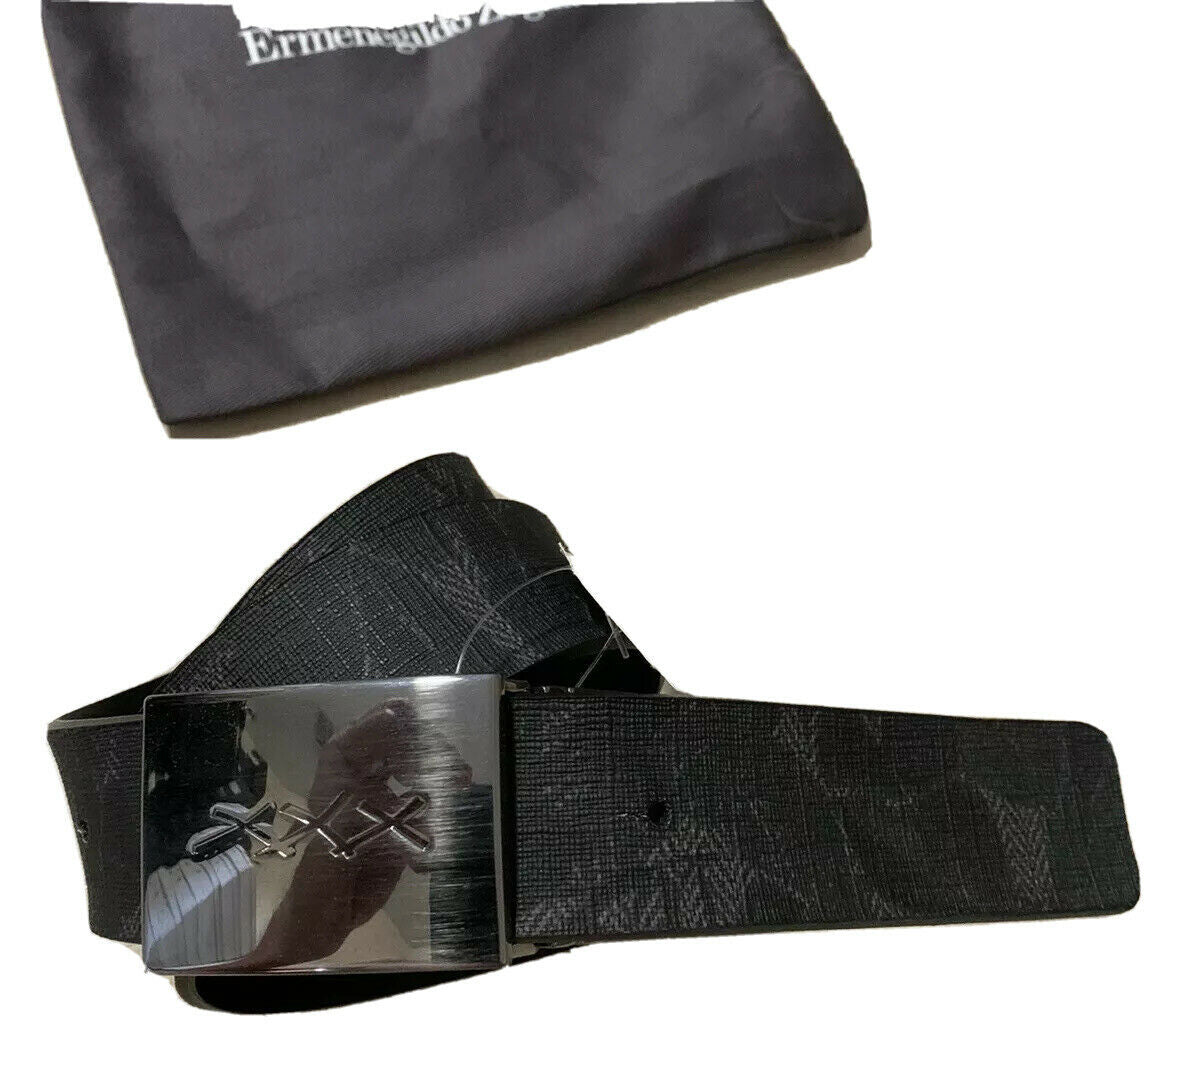 New $450 Ermenegildo Zegna Couture Mens Leather Belt DK Brown 32/85 Italy